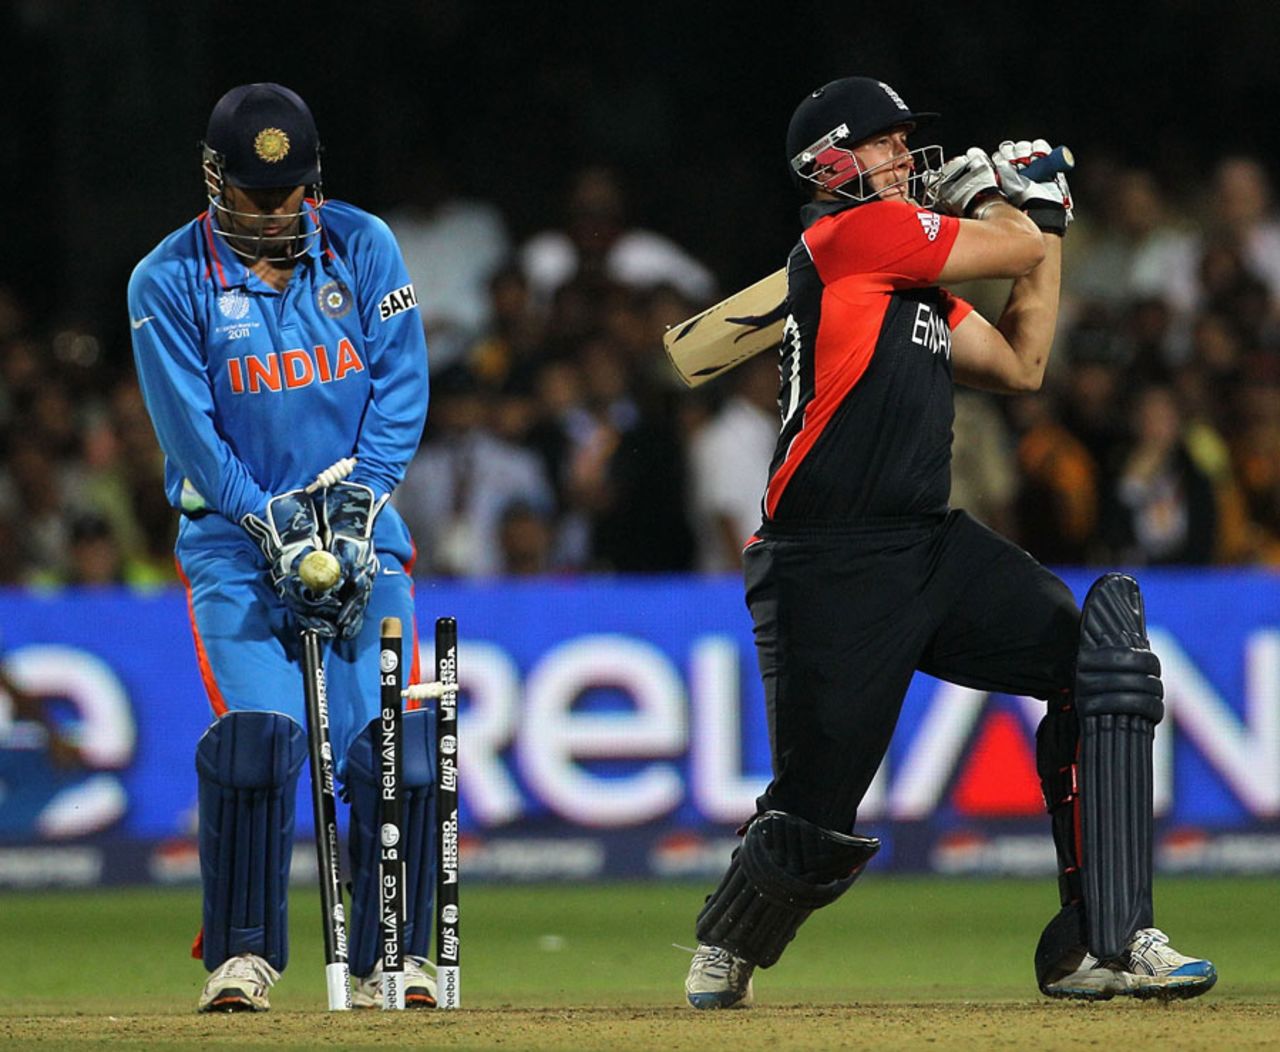 Tim Bresnan is bowled by Piyush Chawla, India v England, World Cup, Group B, Bangalore, February 27, 2011